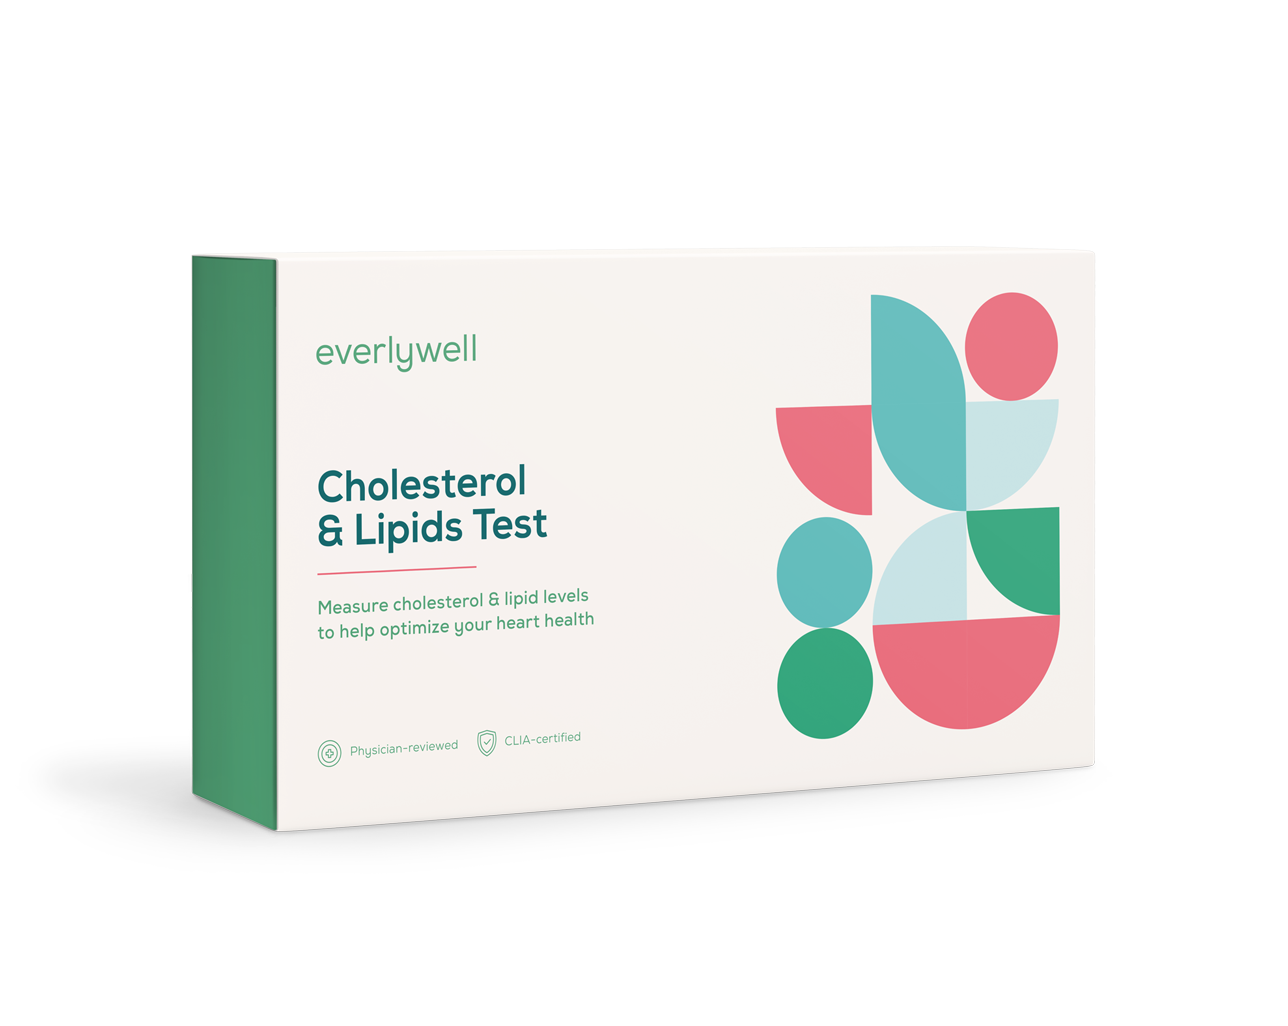 At home Cholesterol & Lipids Test